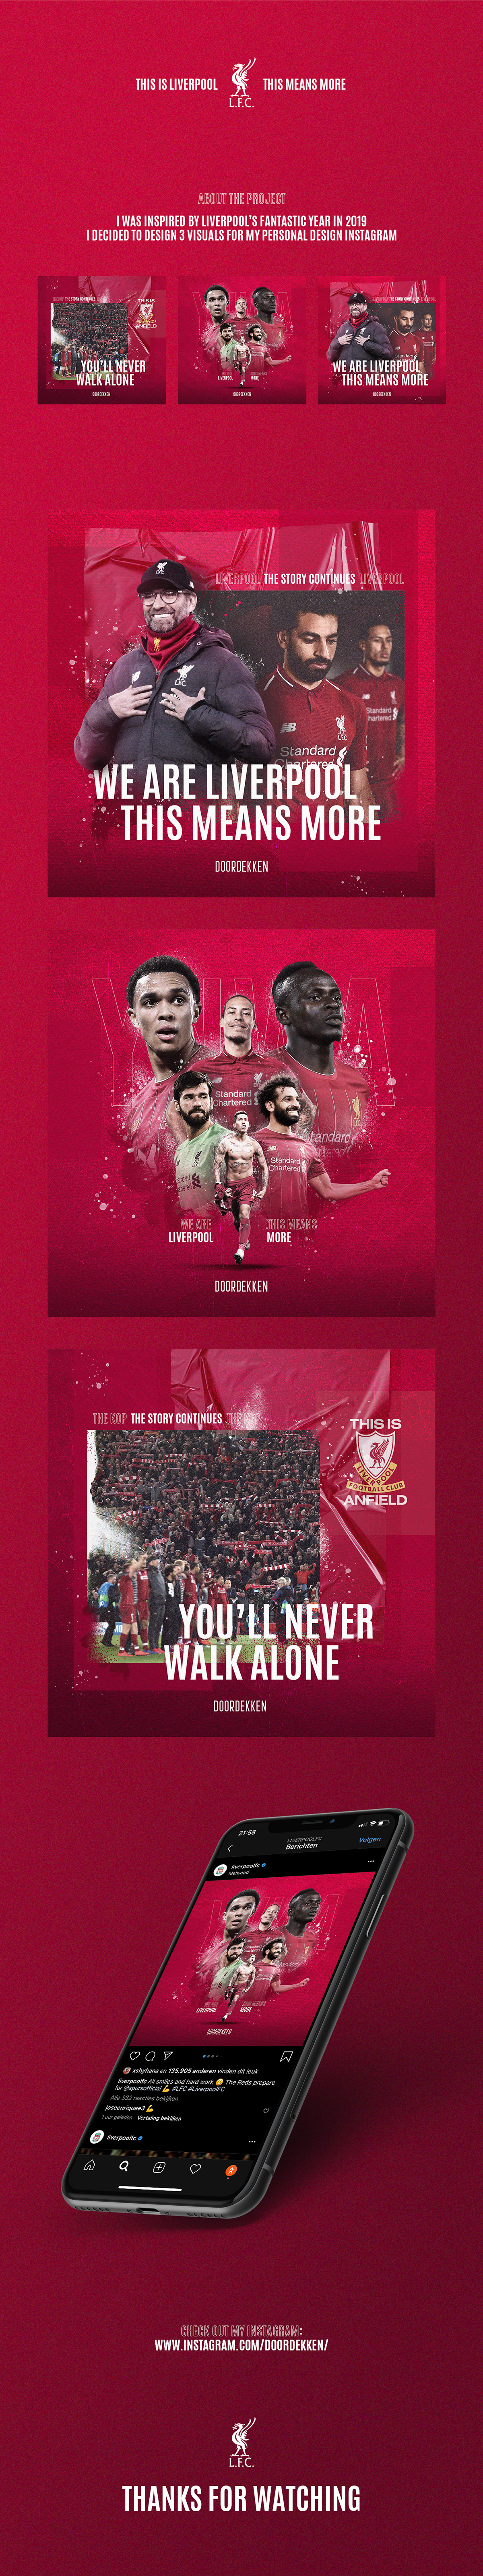 football design photoshop Liverpool LFC premierleague soccer red sports